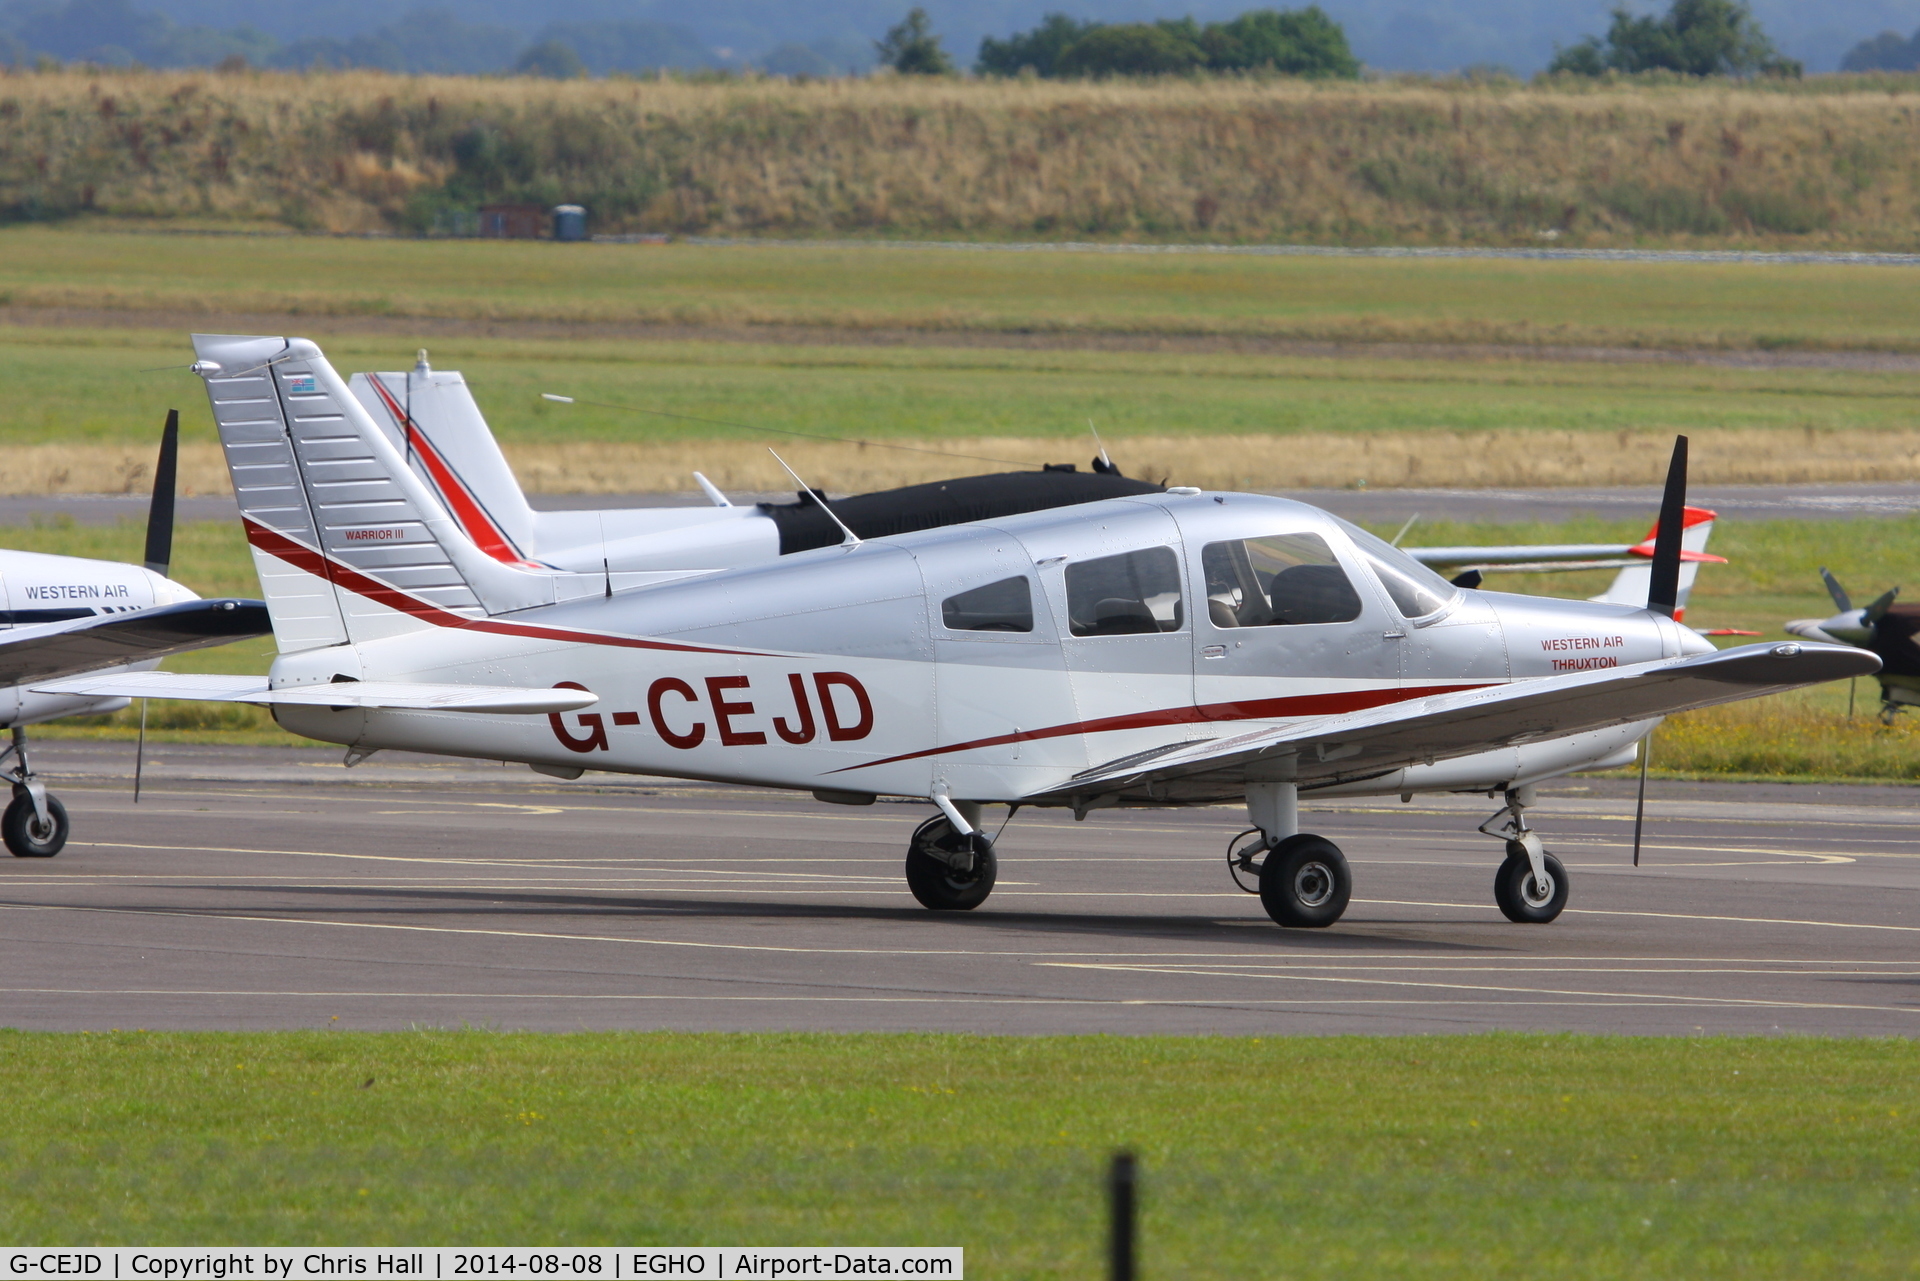 G-CEJD, 2005 Piper PA-28-161 Warrior III C/N 2842244, at Thruxton Aerodrome